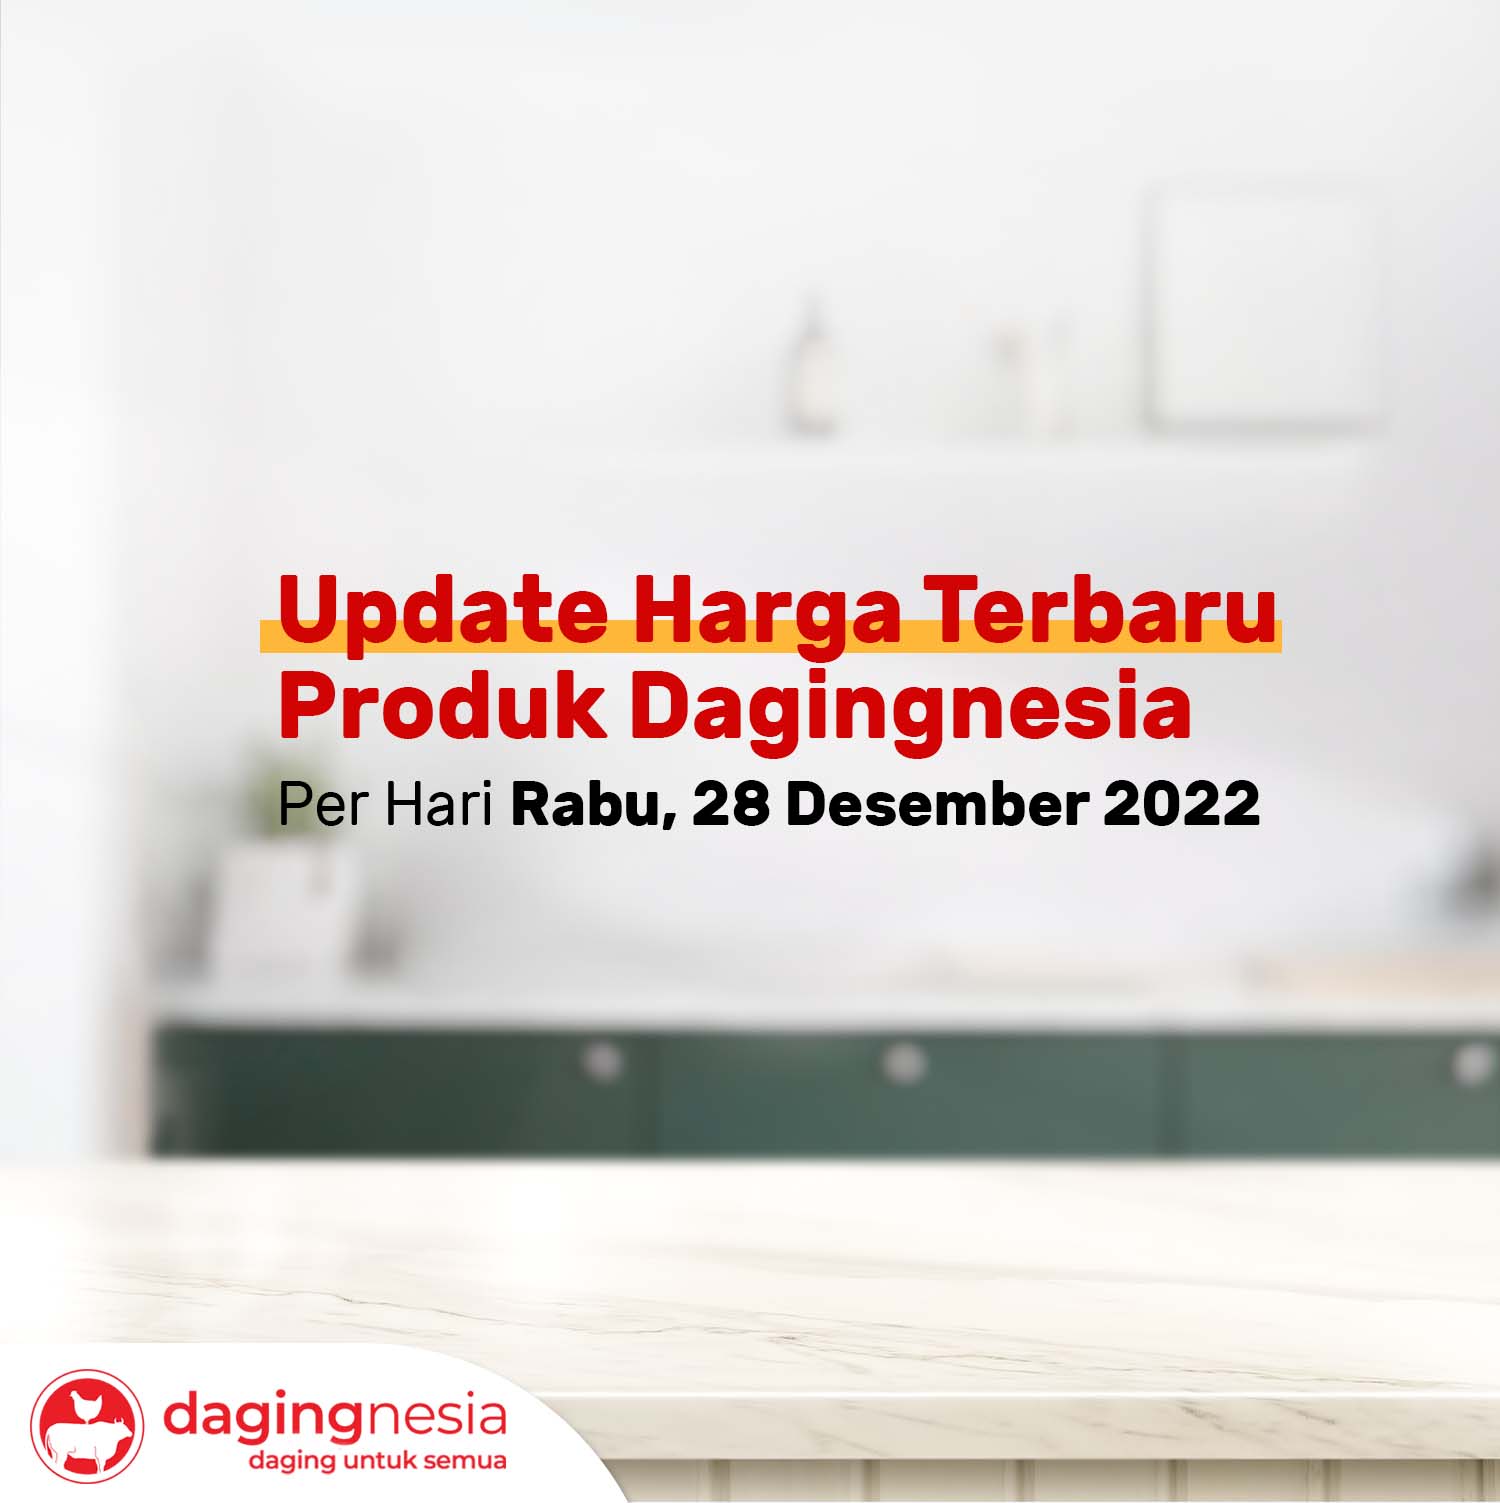 Update Pricelist Dagingnesia – 28 Desember 2022